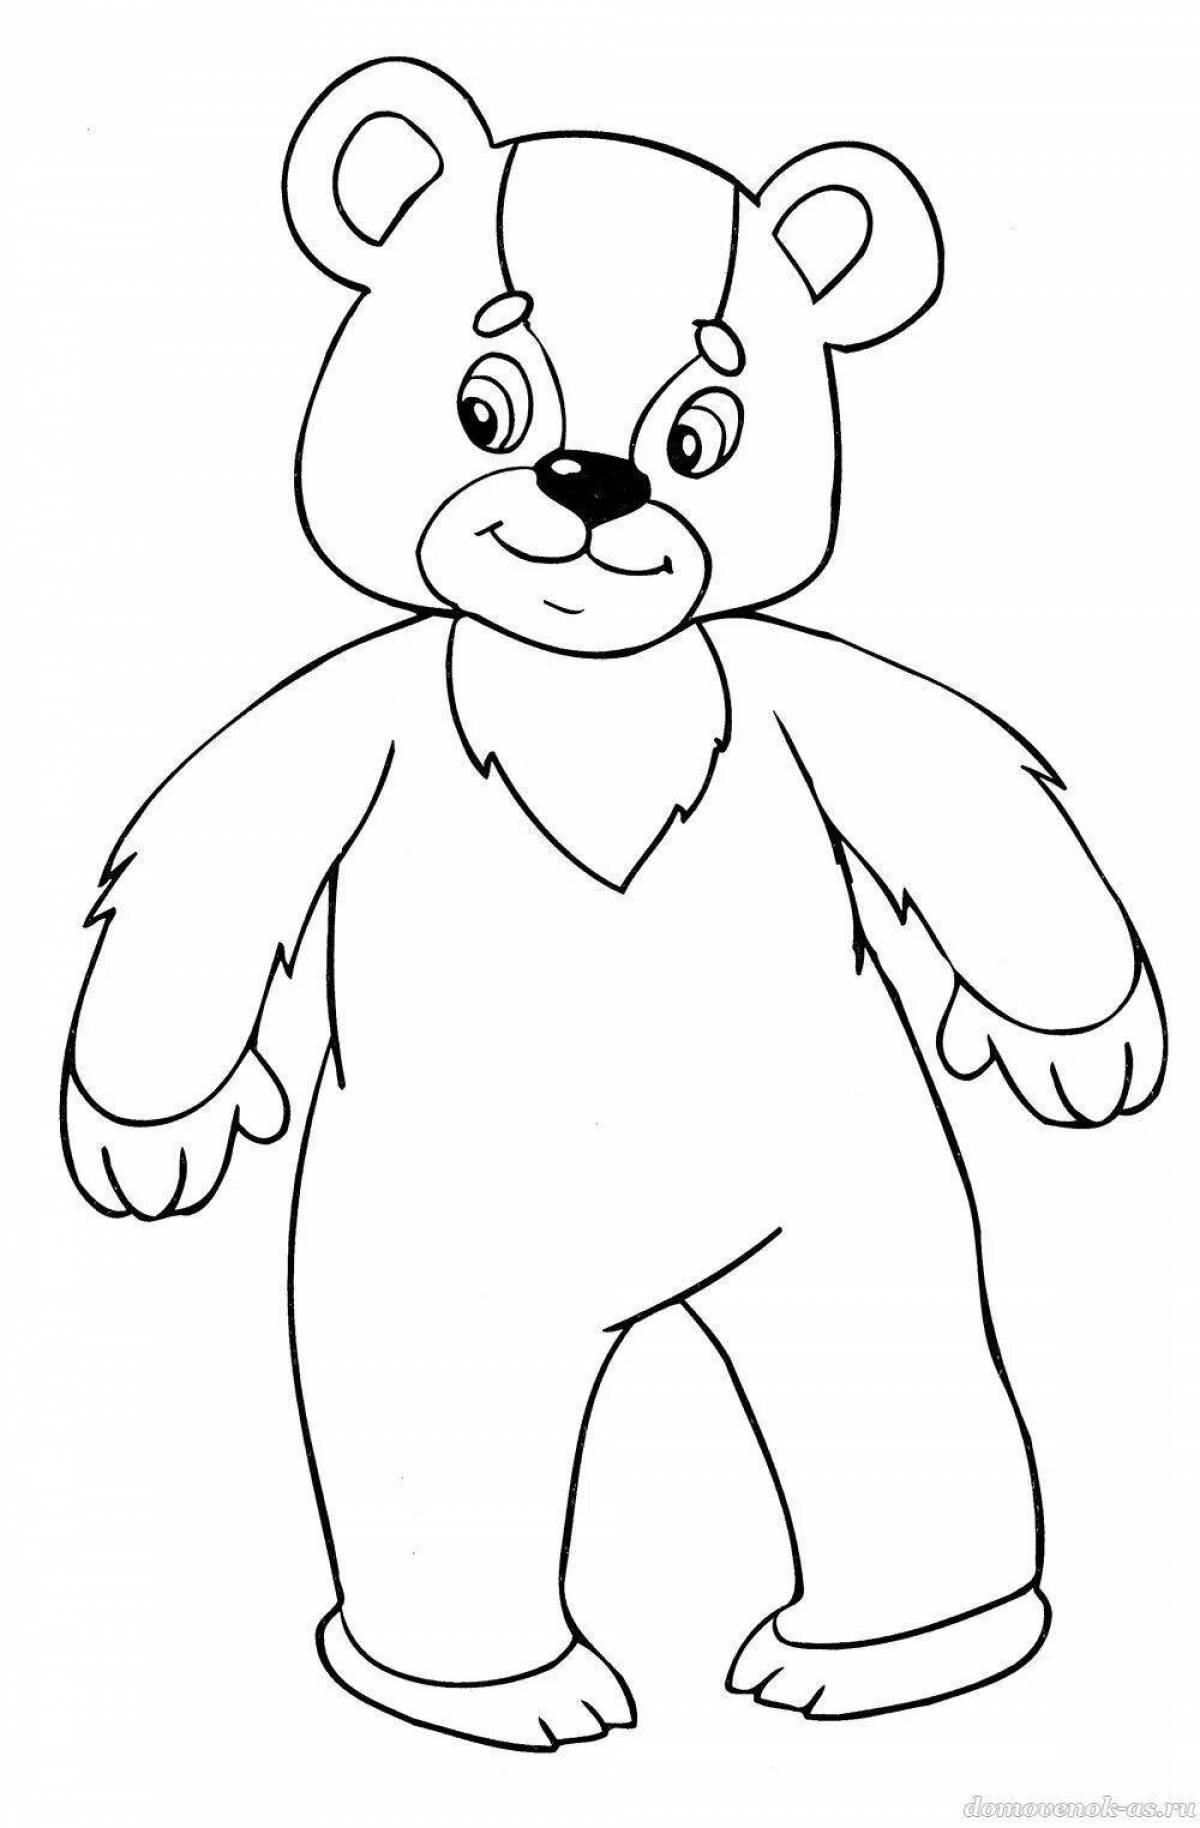 Snug coloring page медведь неуклюжий